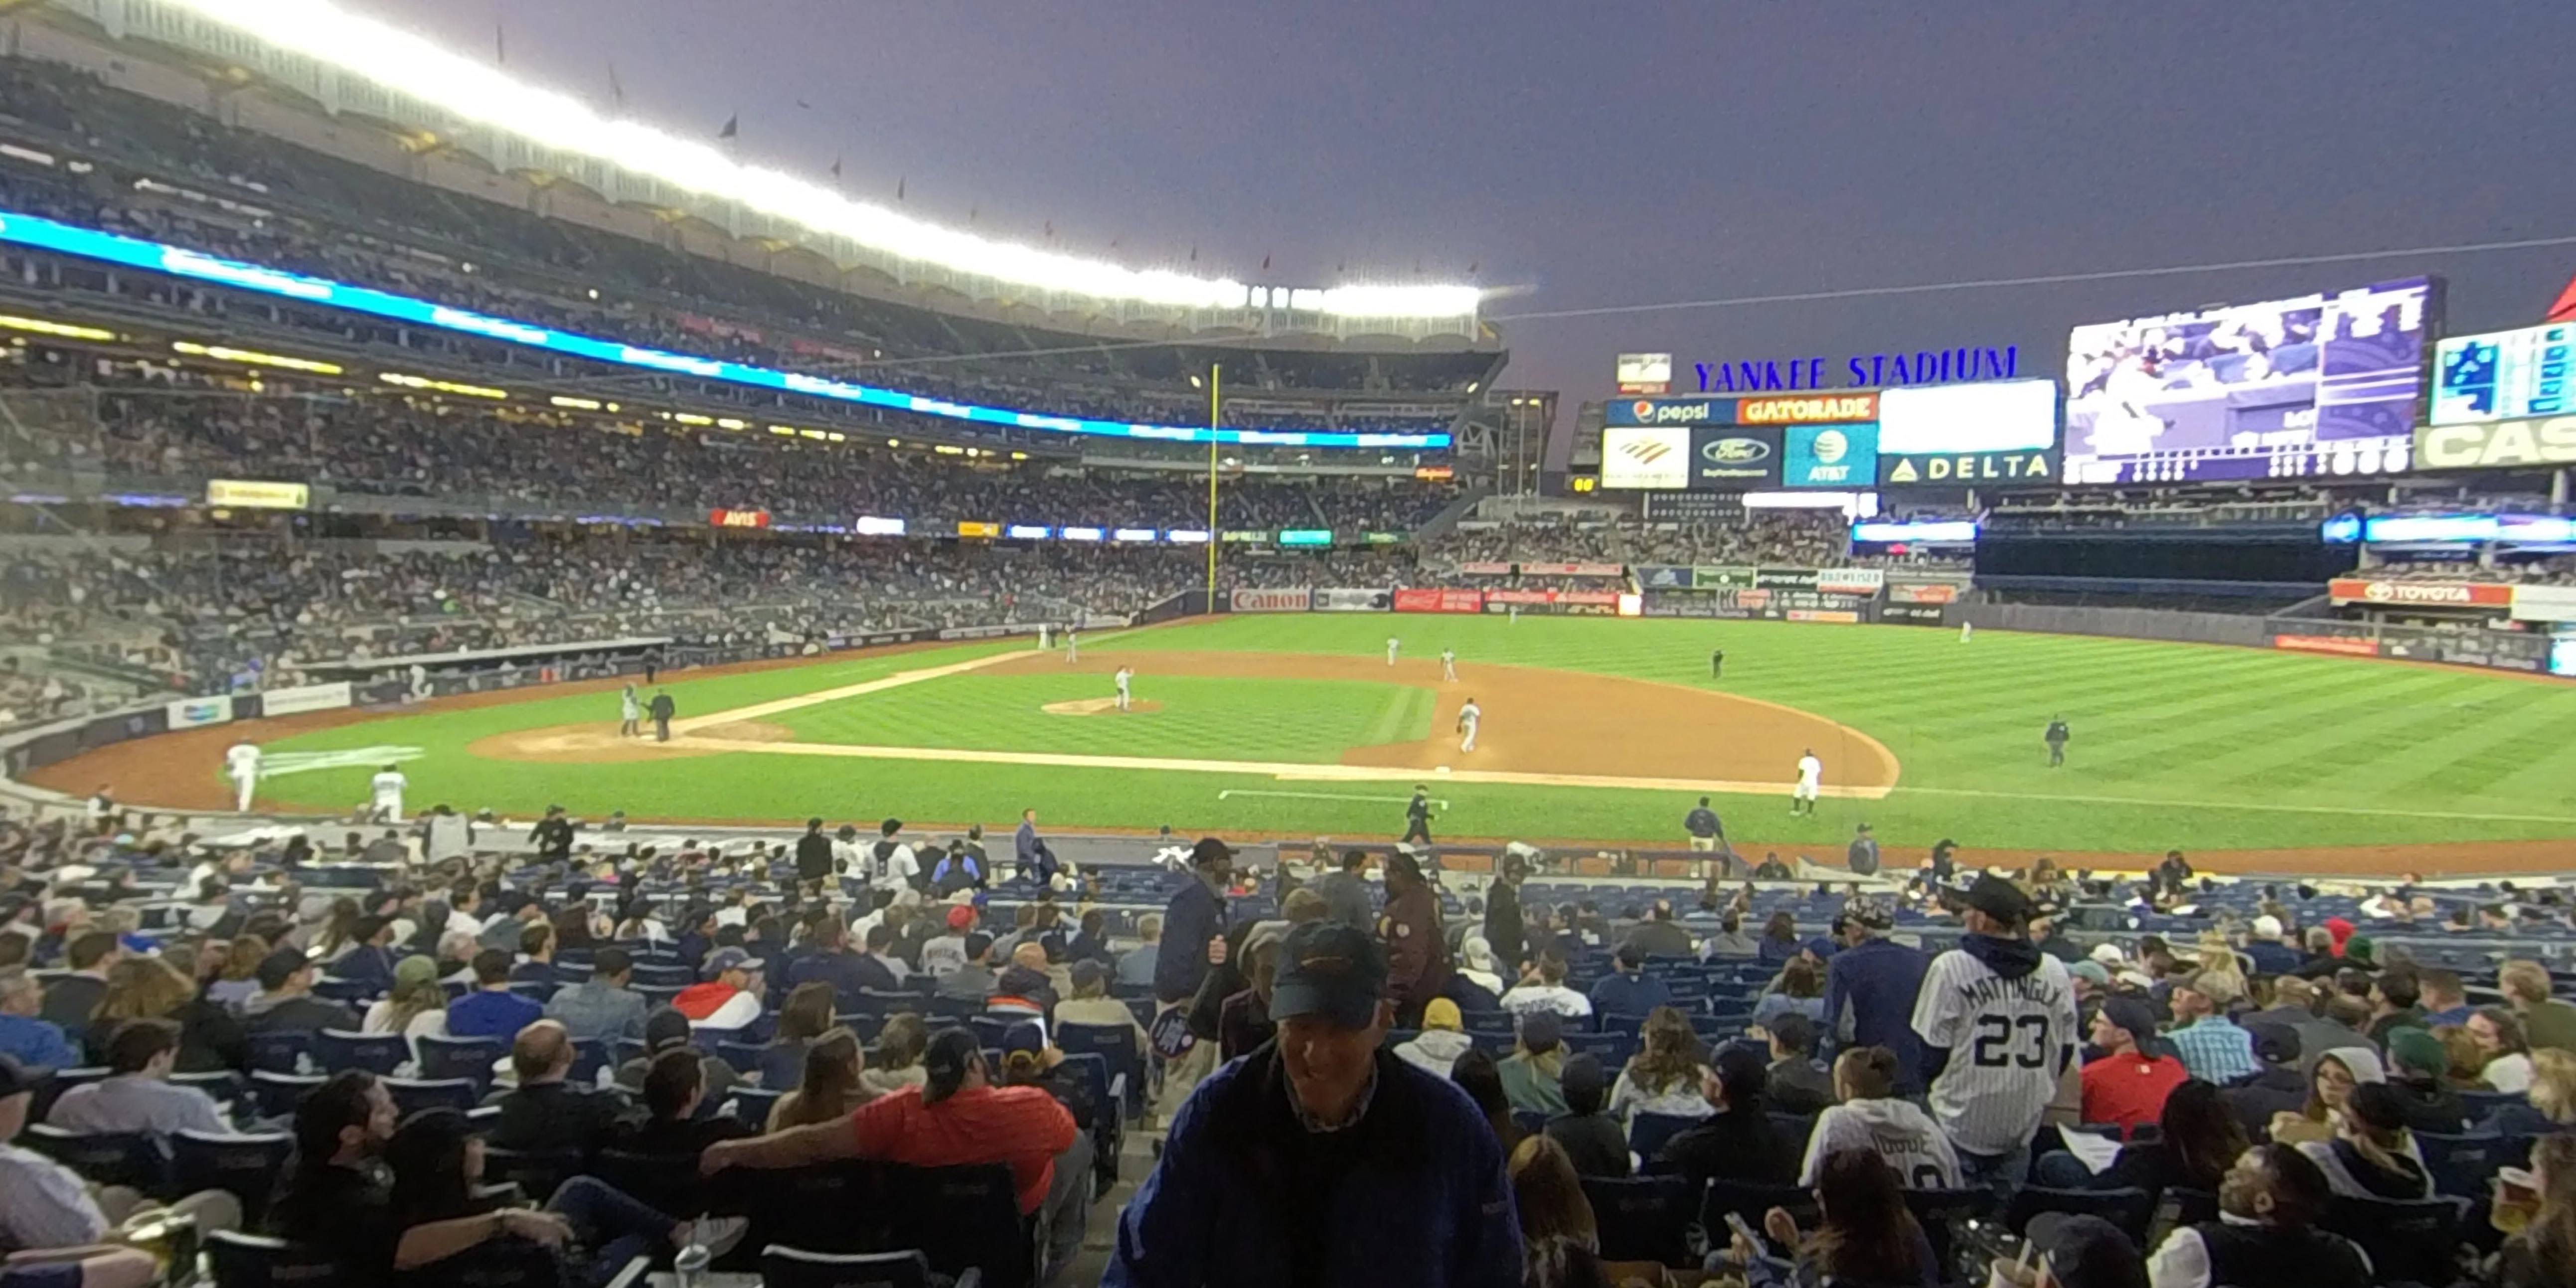 section 115 panoramic seat view  for baseball - yankee stadium